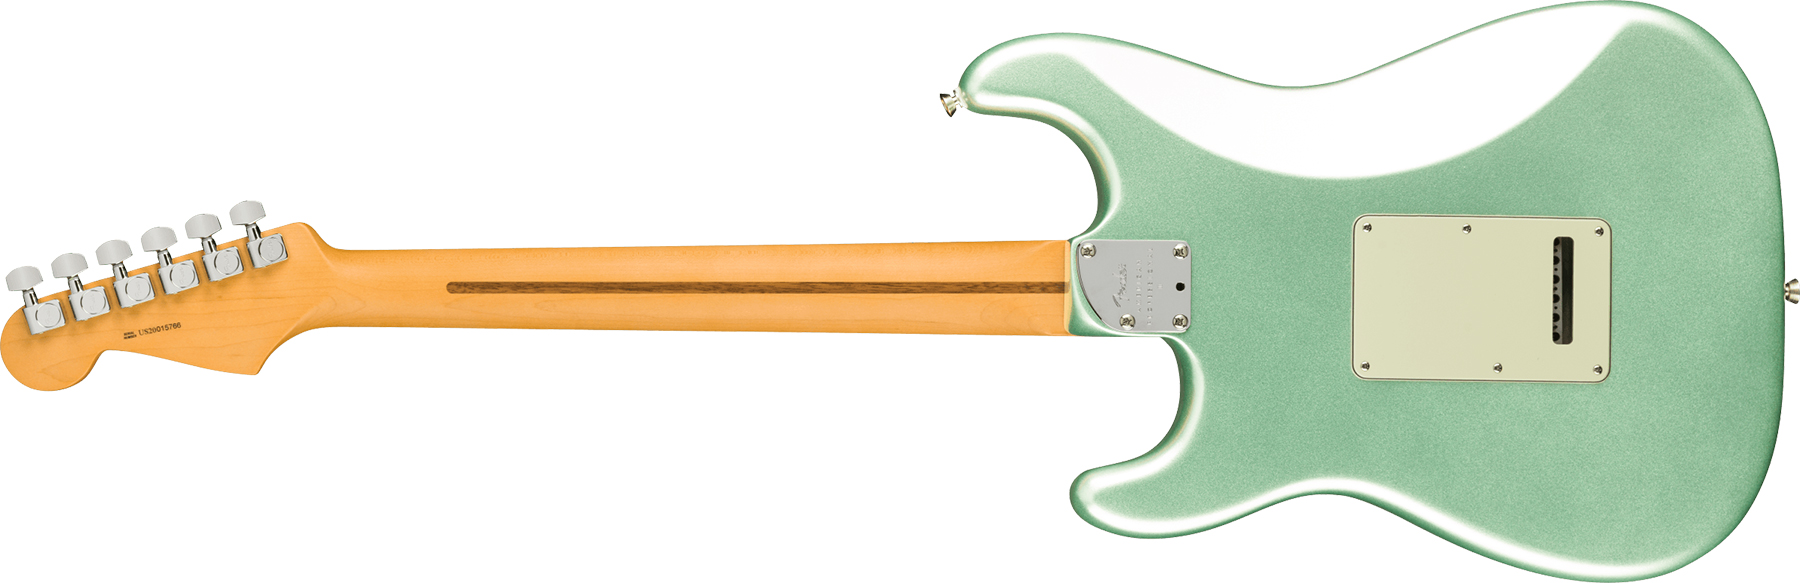 Fender Strat American Professional Ii Hss Usa Mn - Mystic Surf Green - Str shape electric guitar - Variation 1